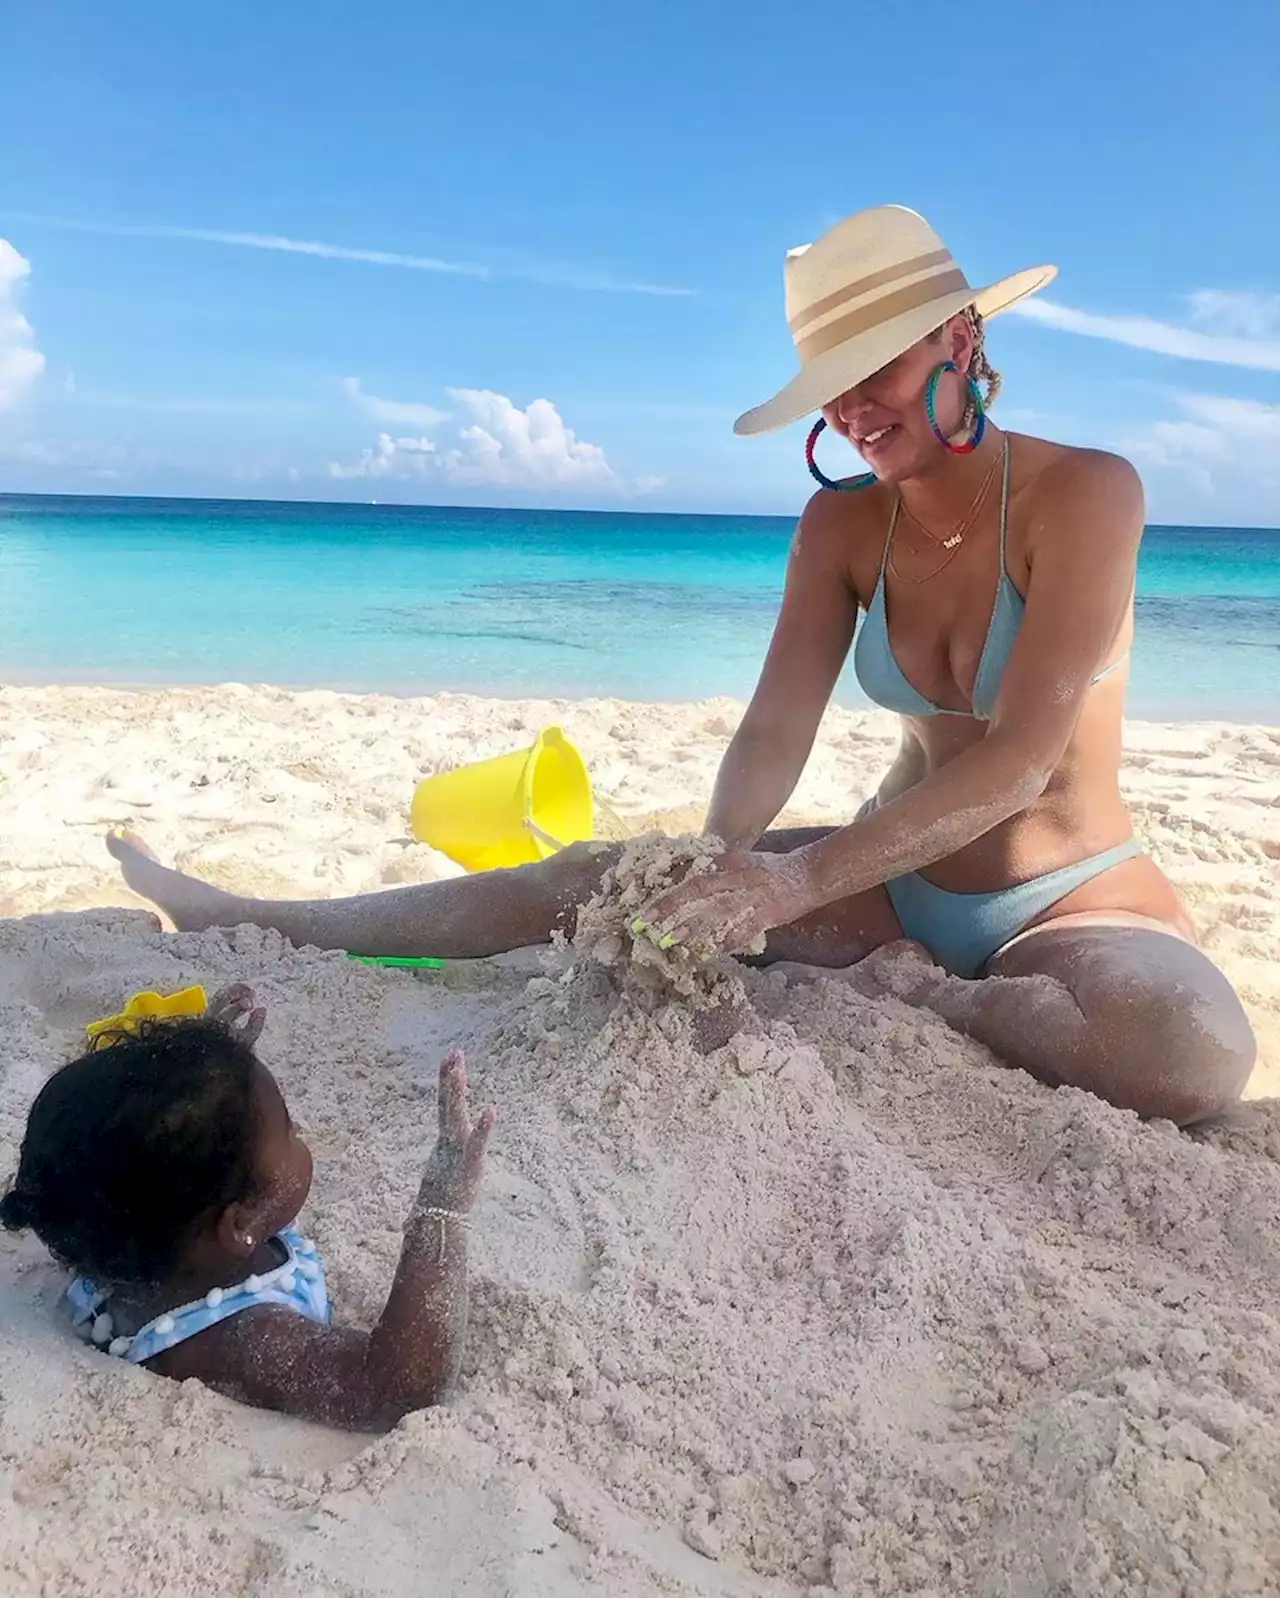 Khloe Kardashian Poses in Bikini and Plays With Her Beach ...